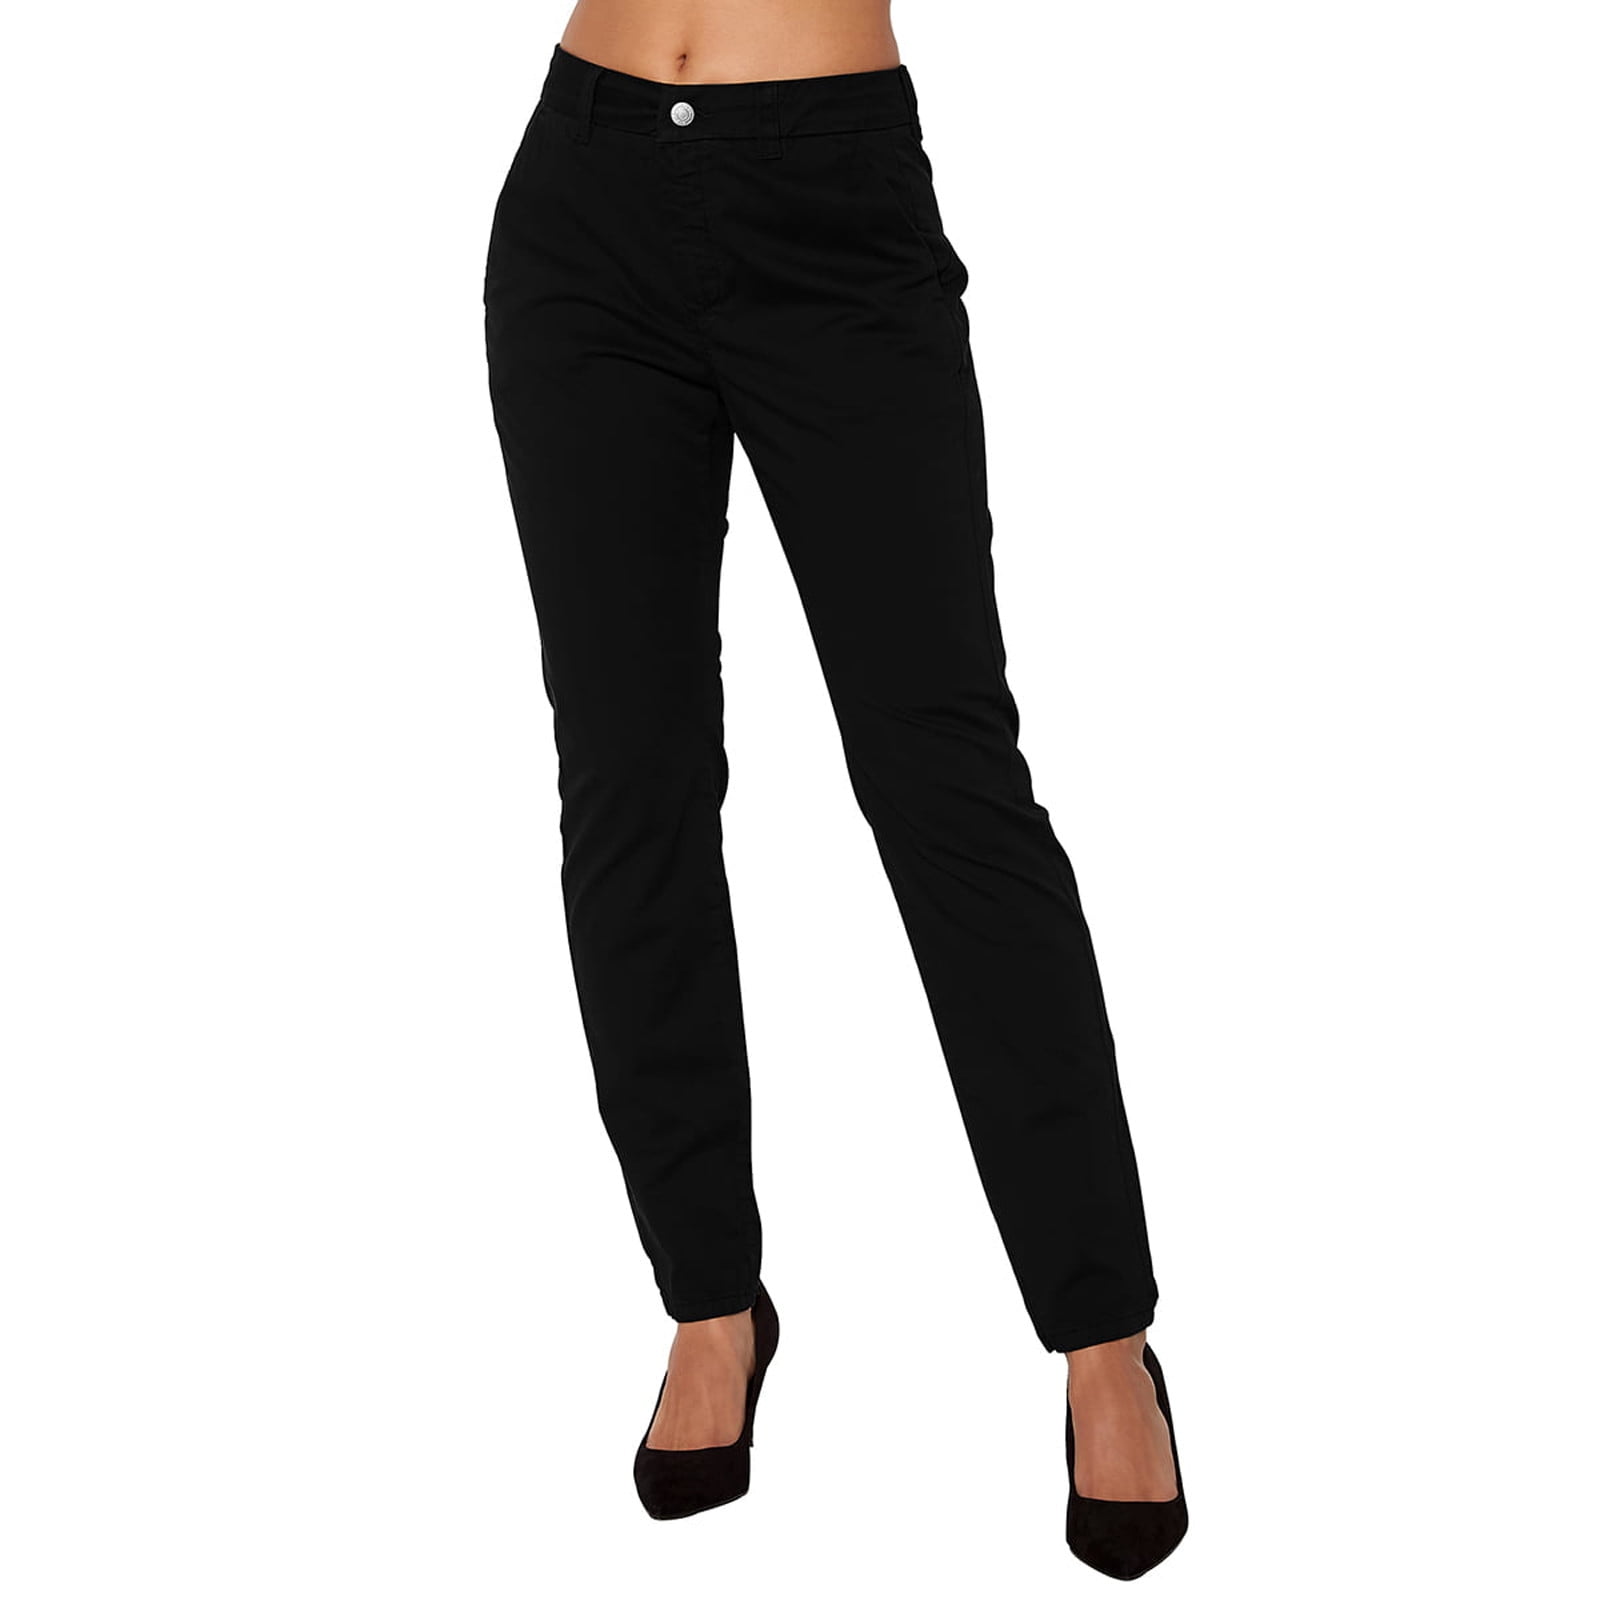 XFLWAM Dress Pants for Women Comfort Stretchy Slacks Work Pants